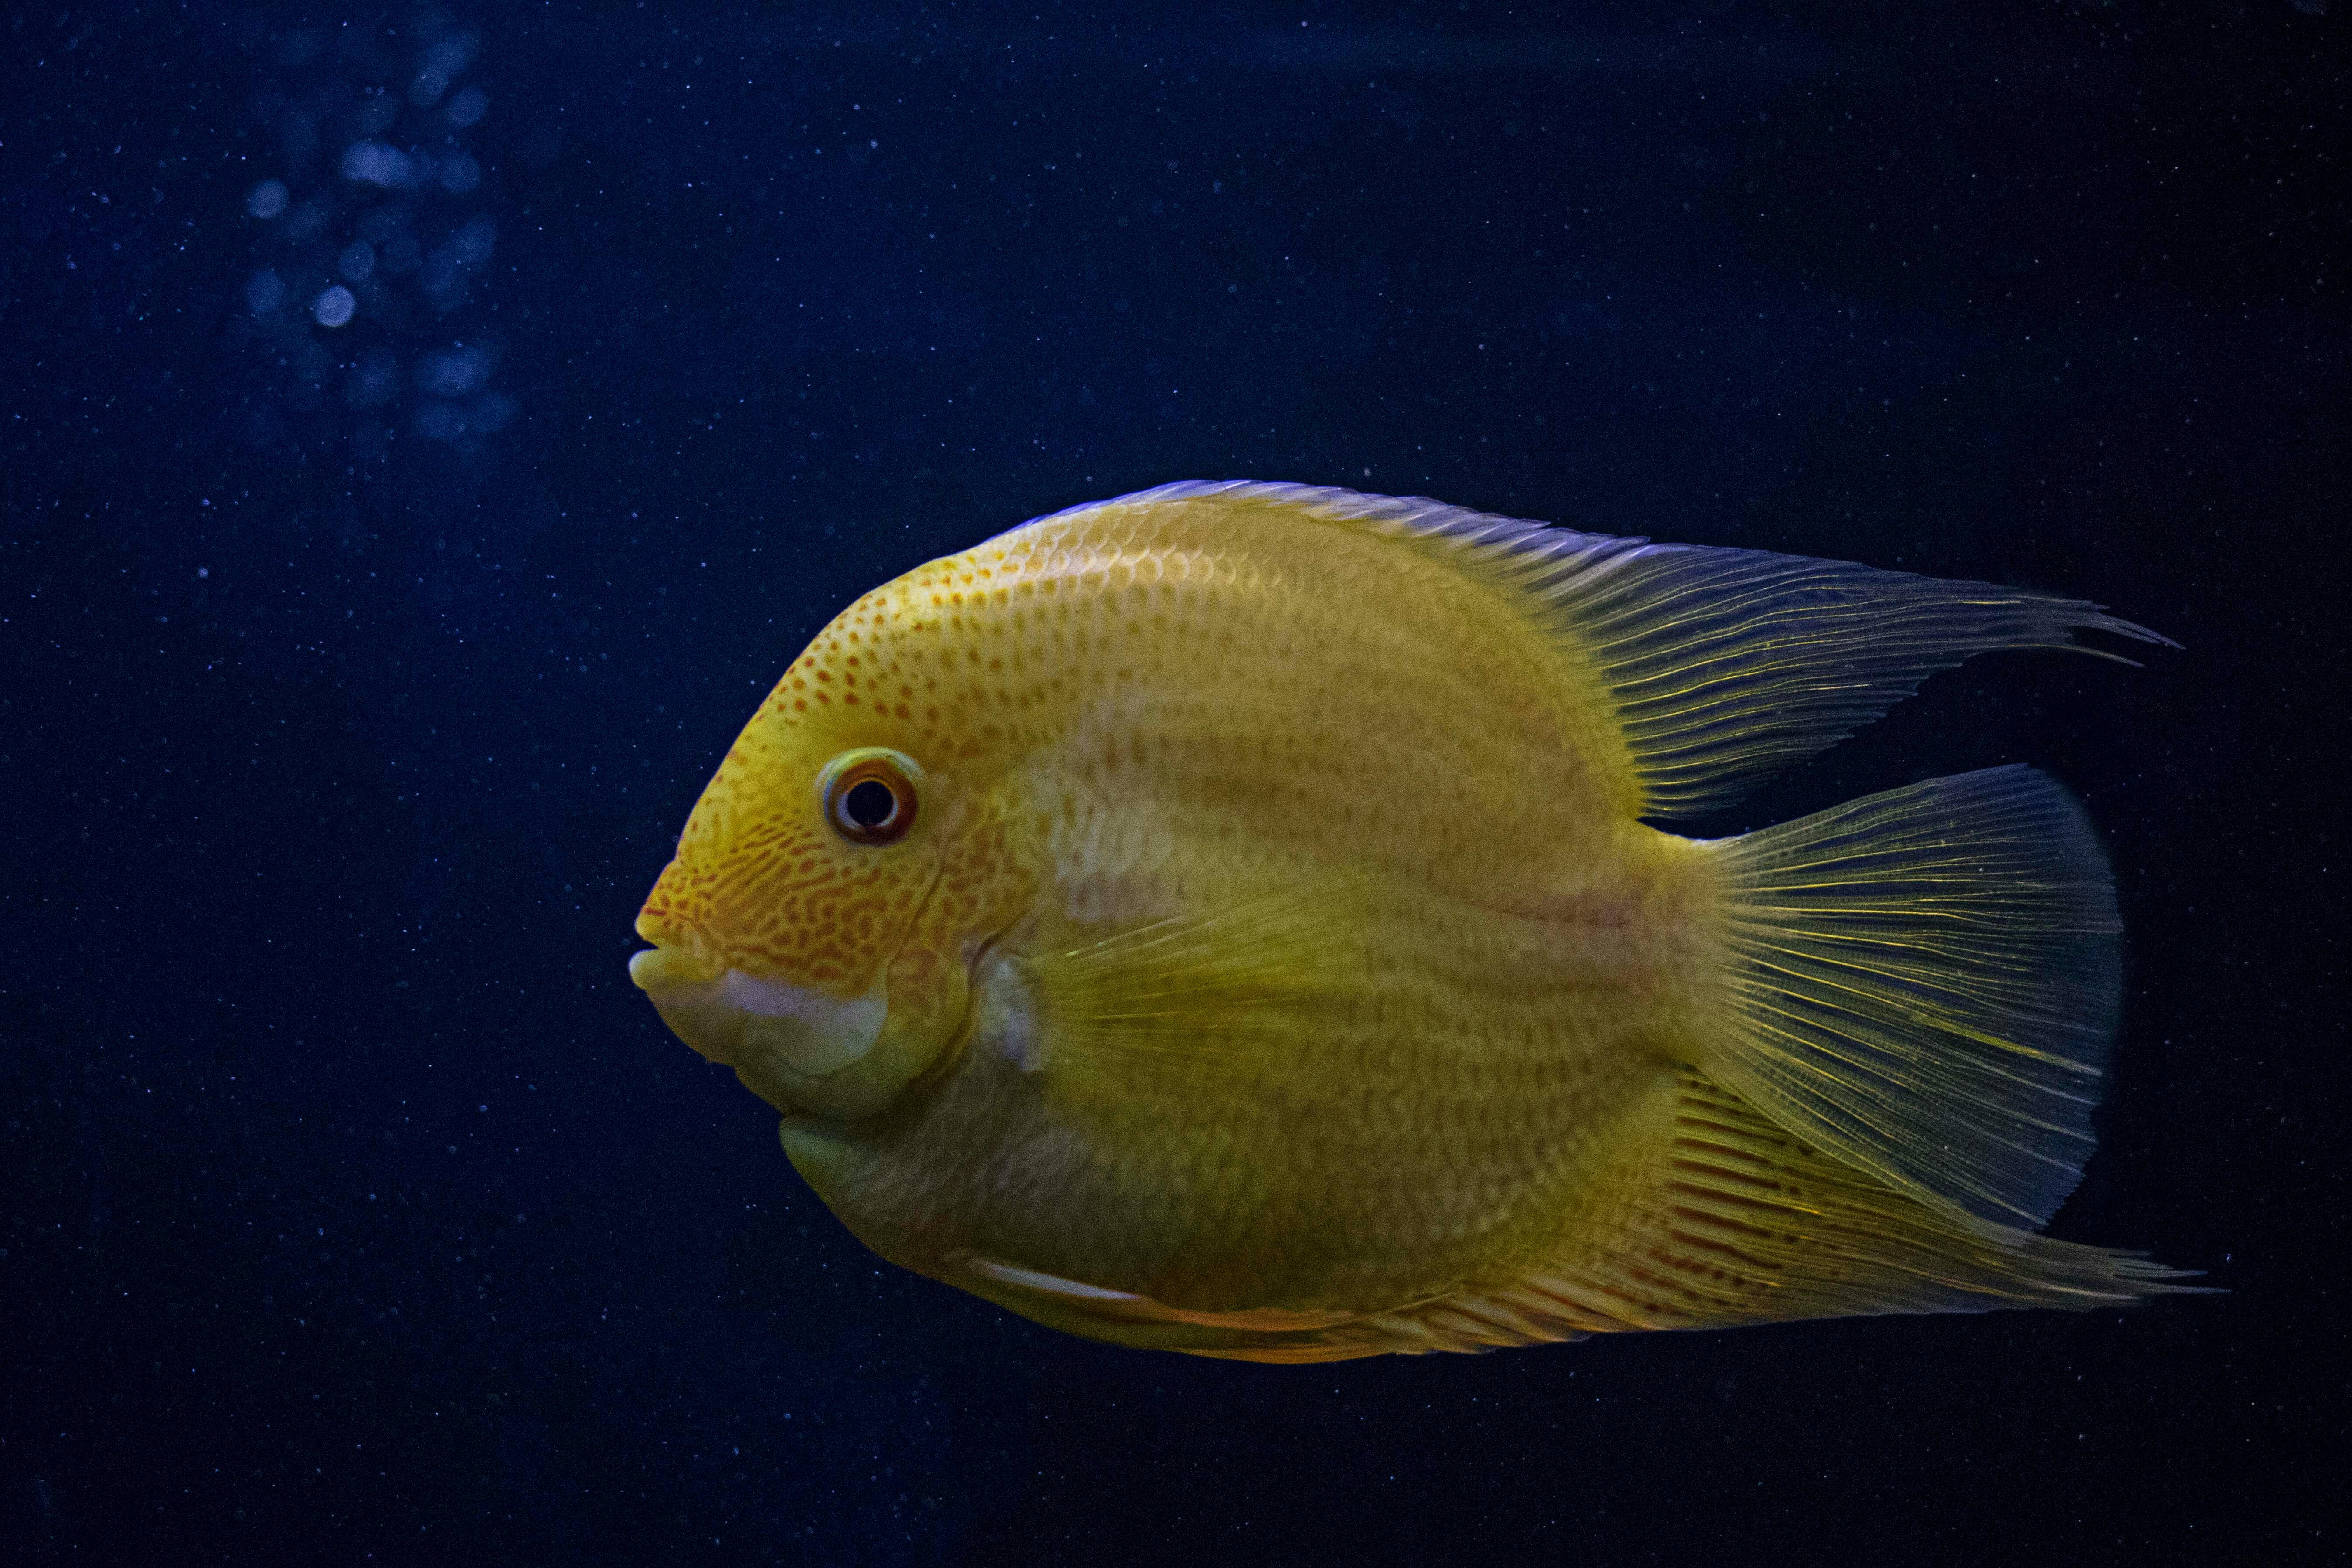 Yellow fish in water. | Source: Pexels